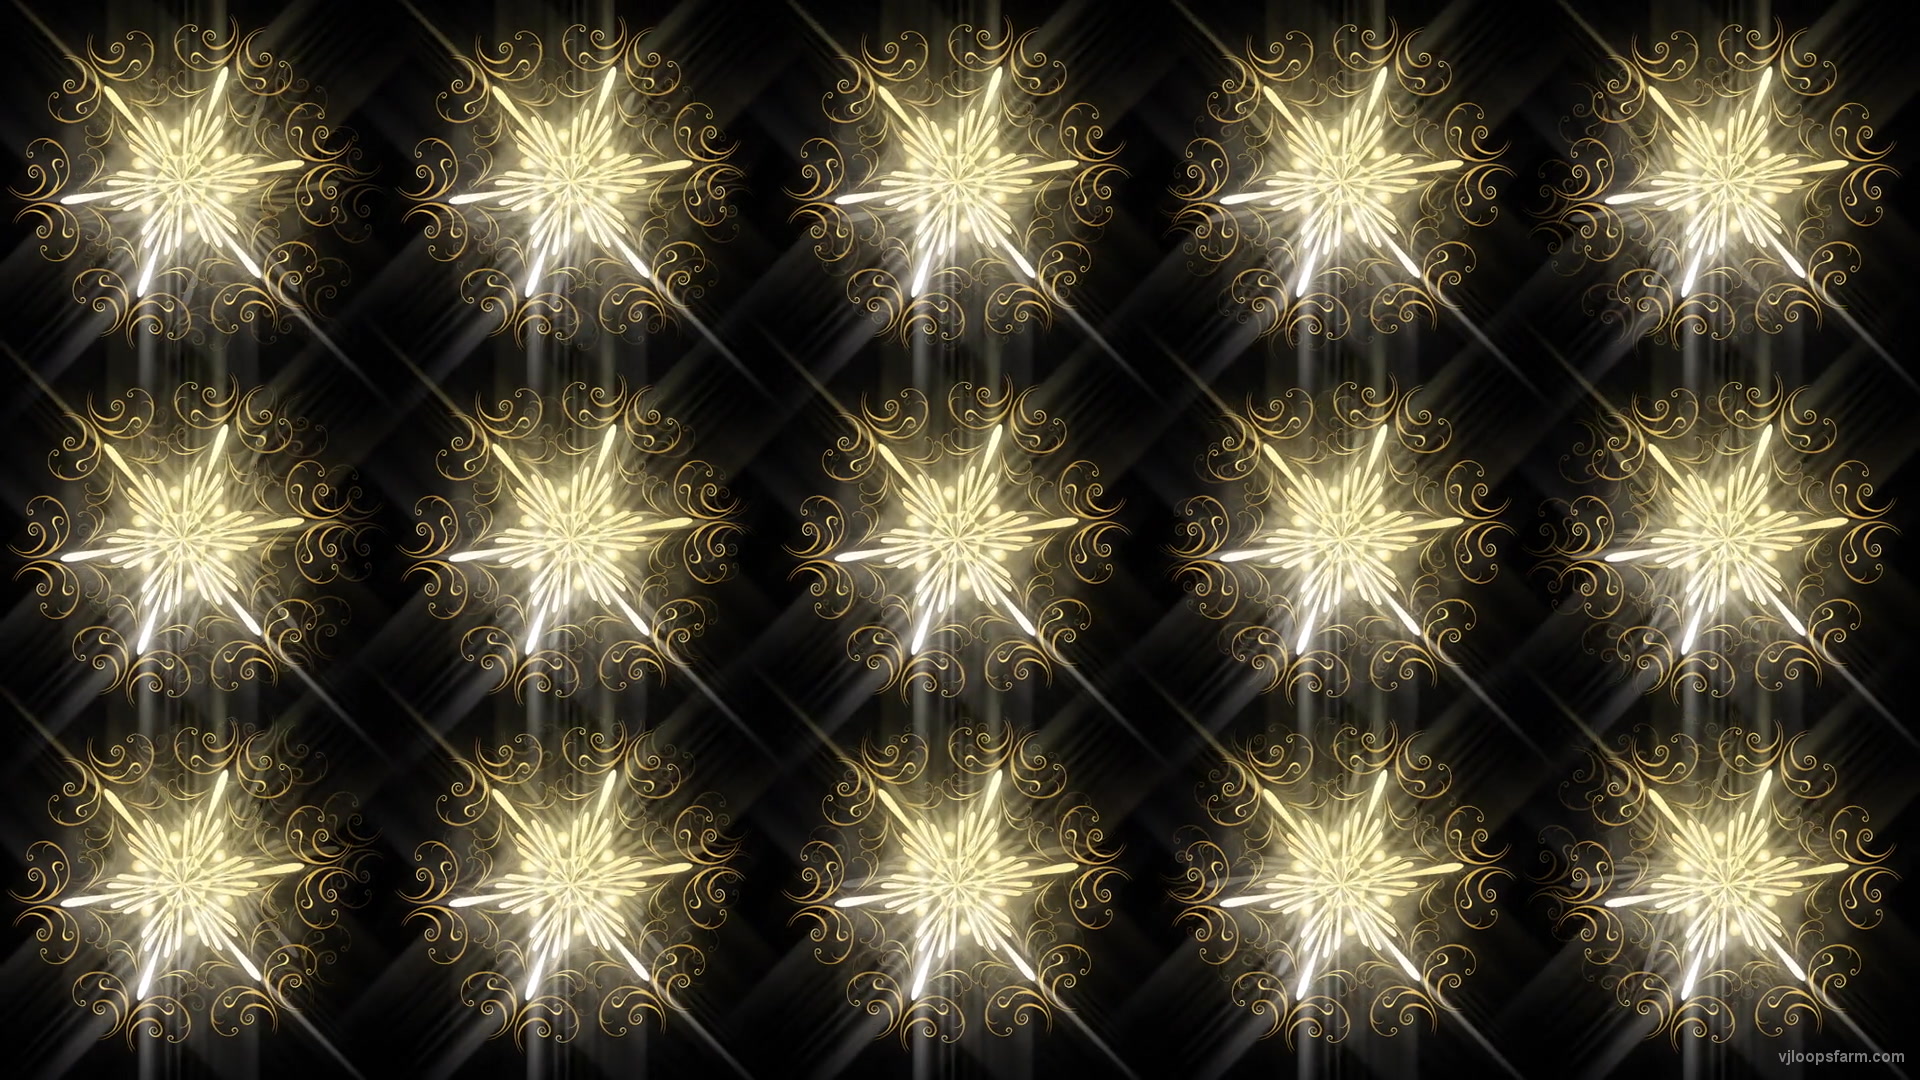 Snowflake gold stars pattern with rays Ultra HD VJ Loop